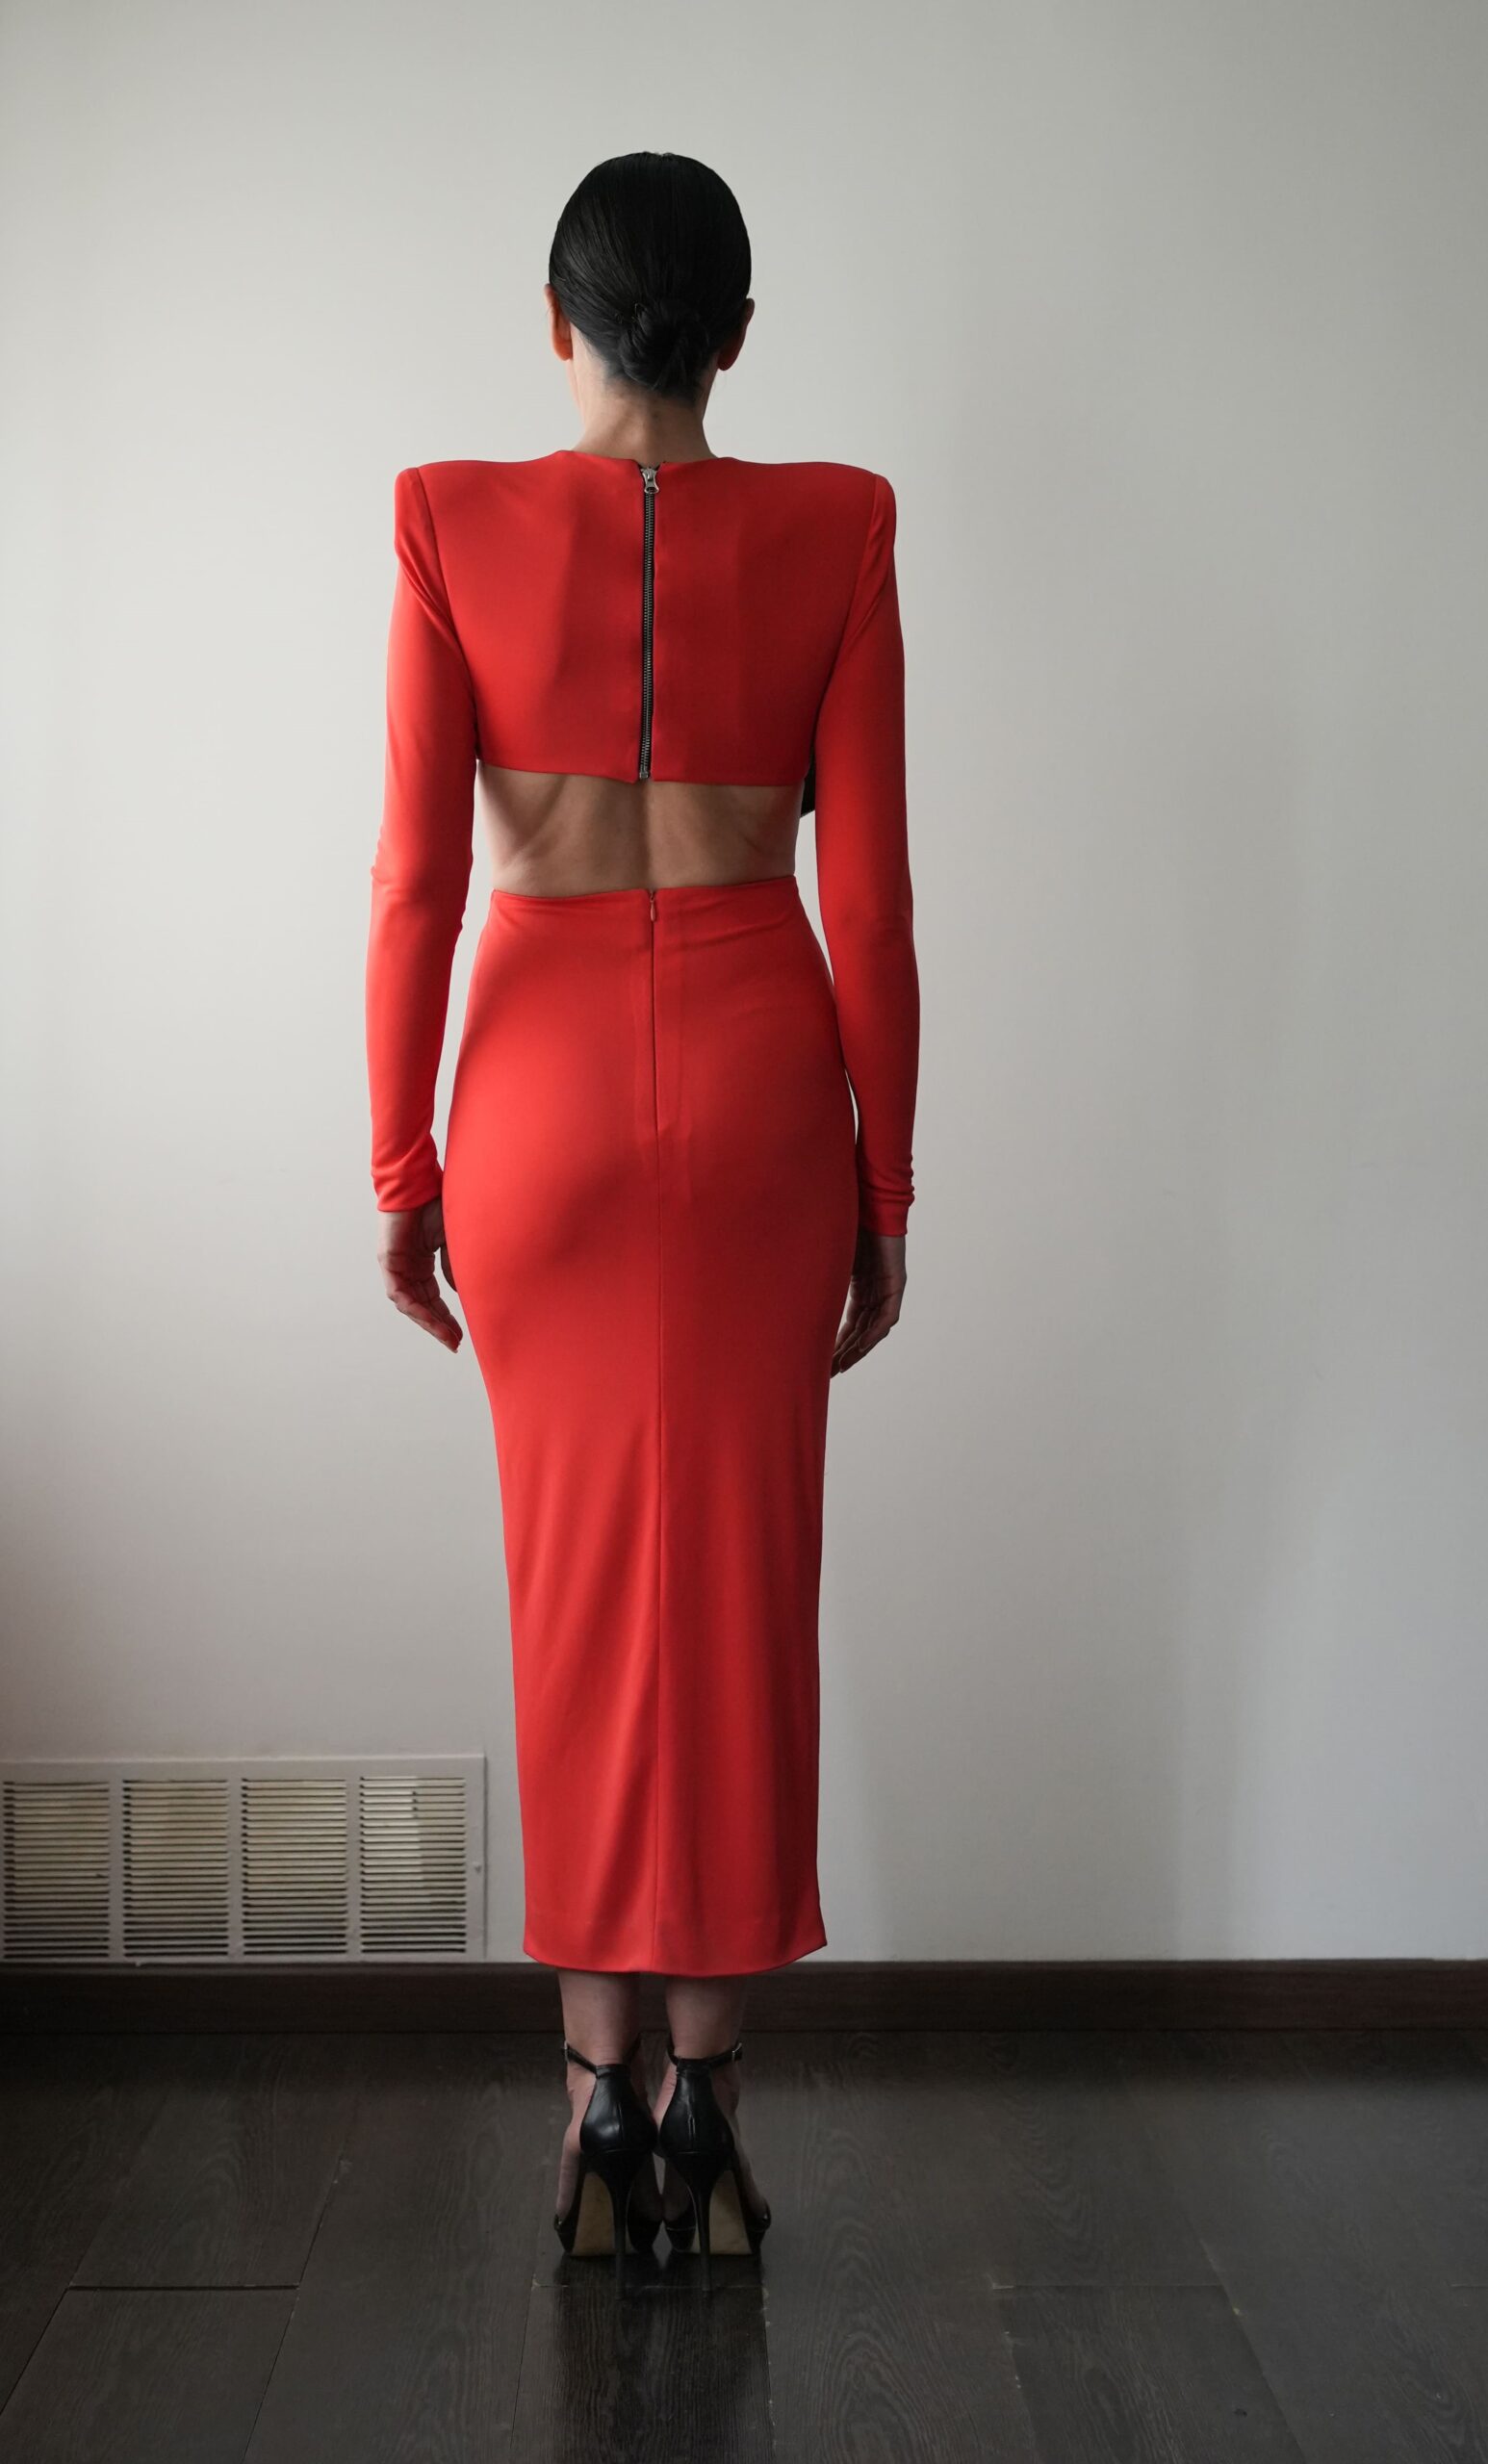 185-Bow-dress-Veintitres.01-Collection-Flamenco-Fashion-1.jpg